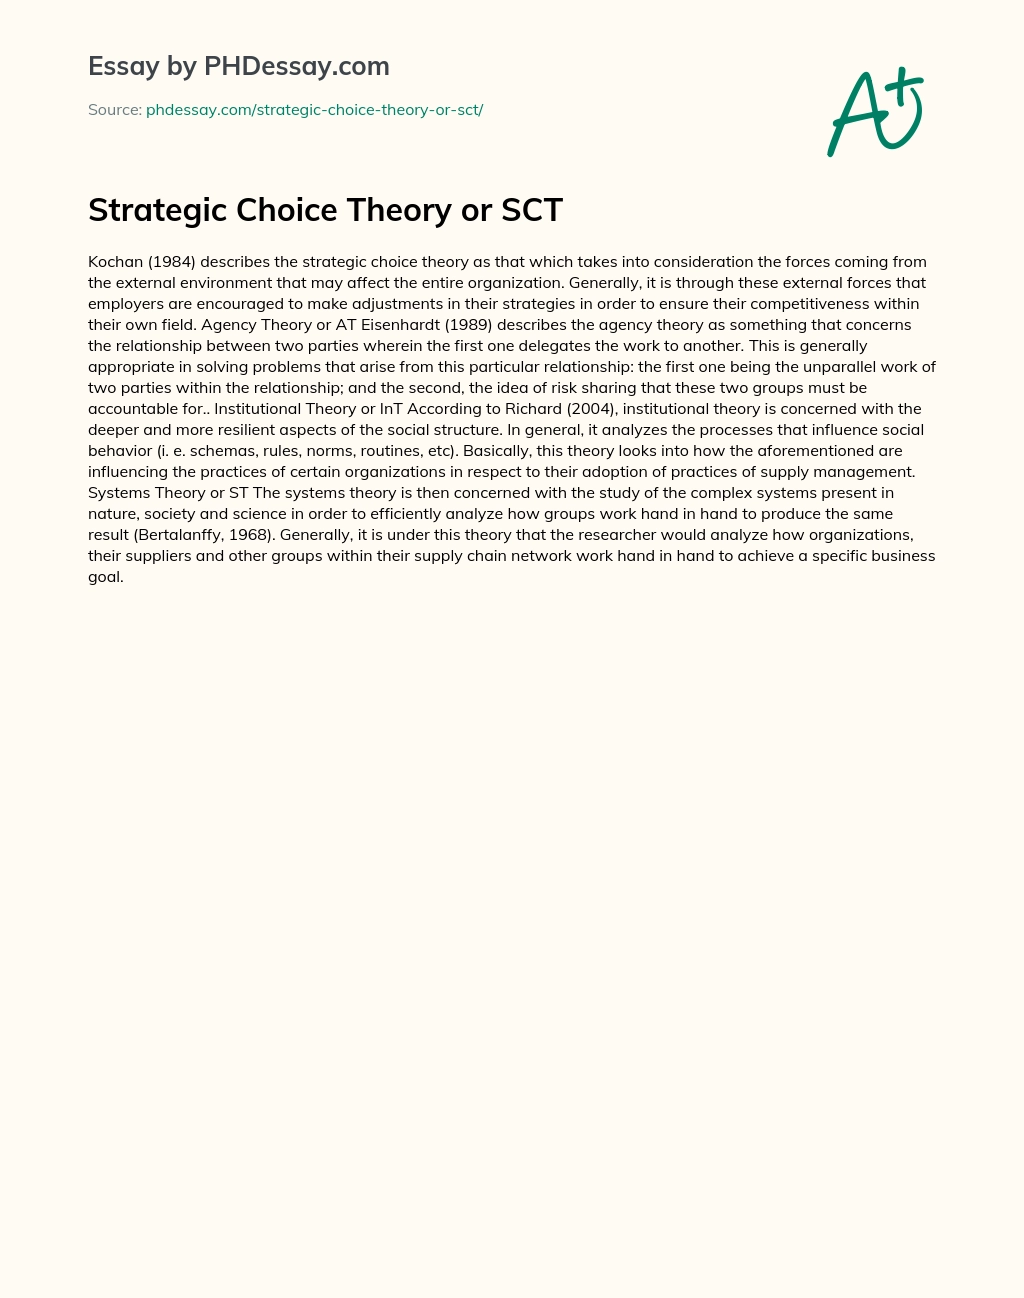 Strategic Choice Theory or SCT essay